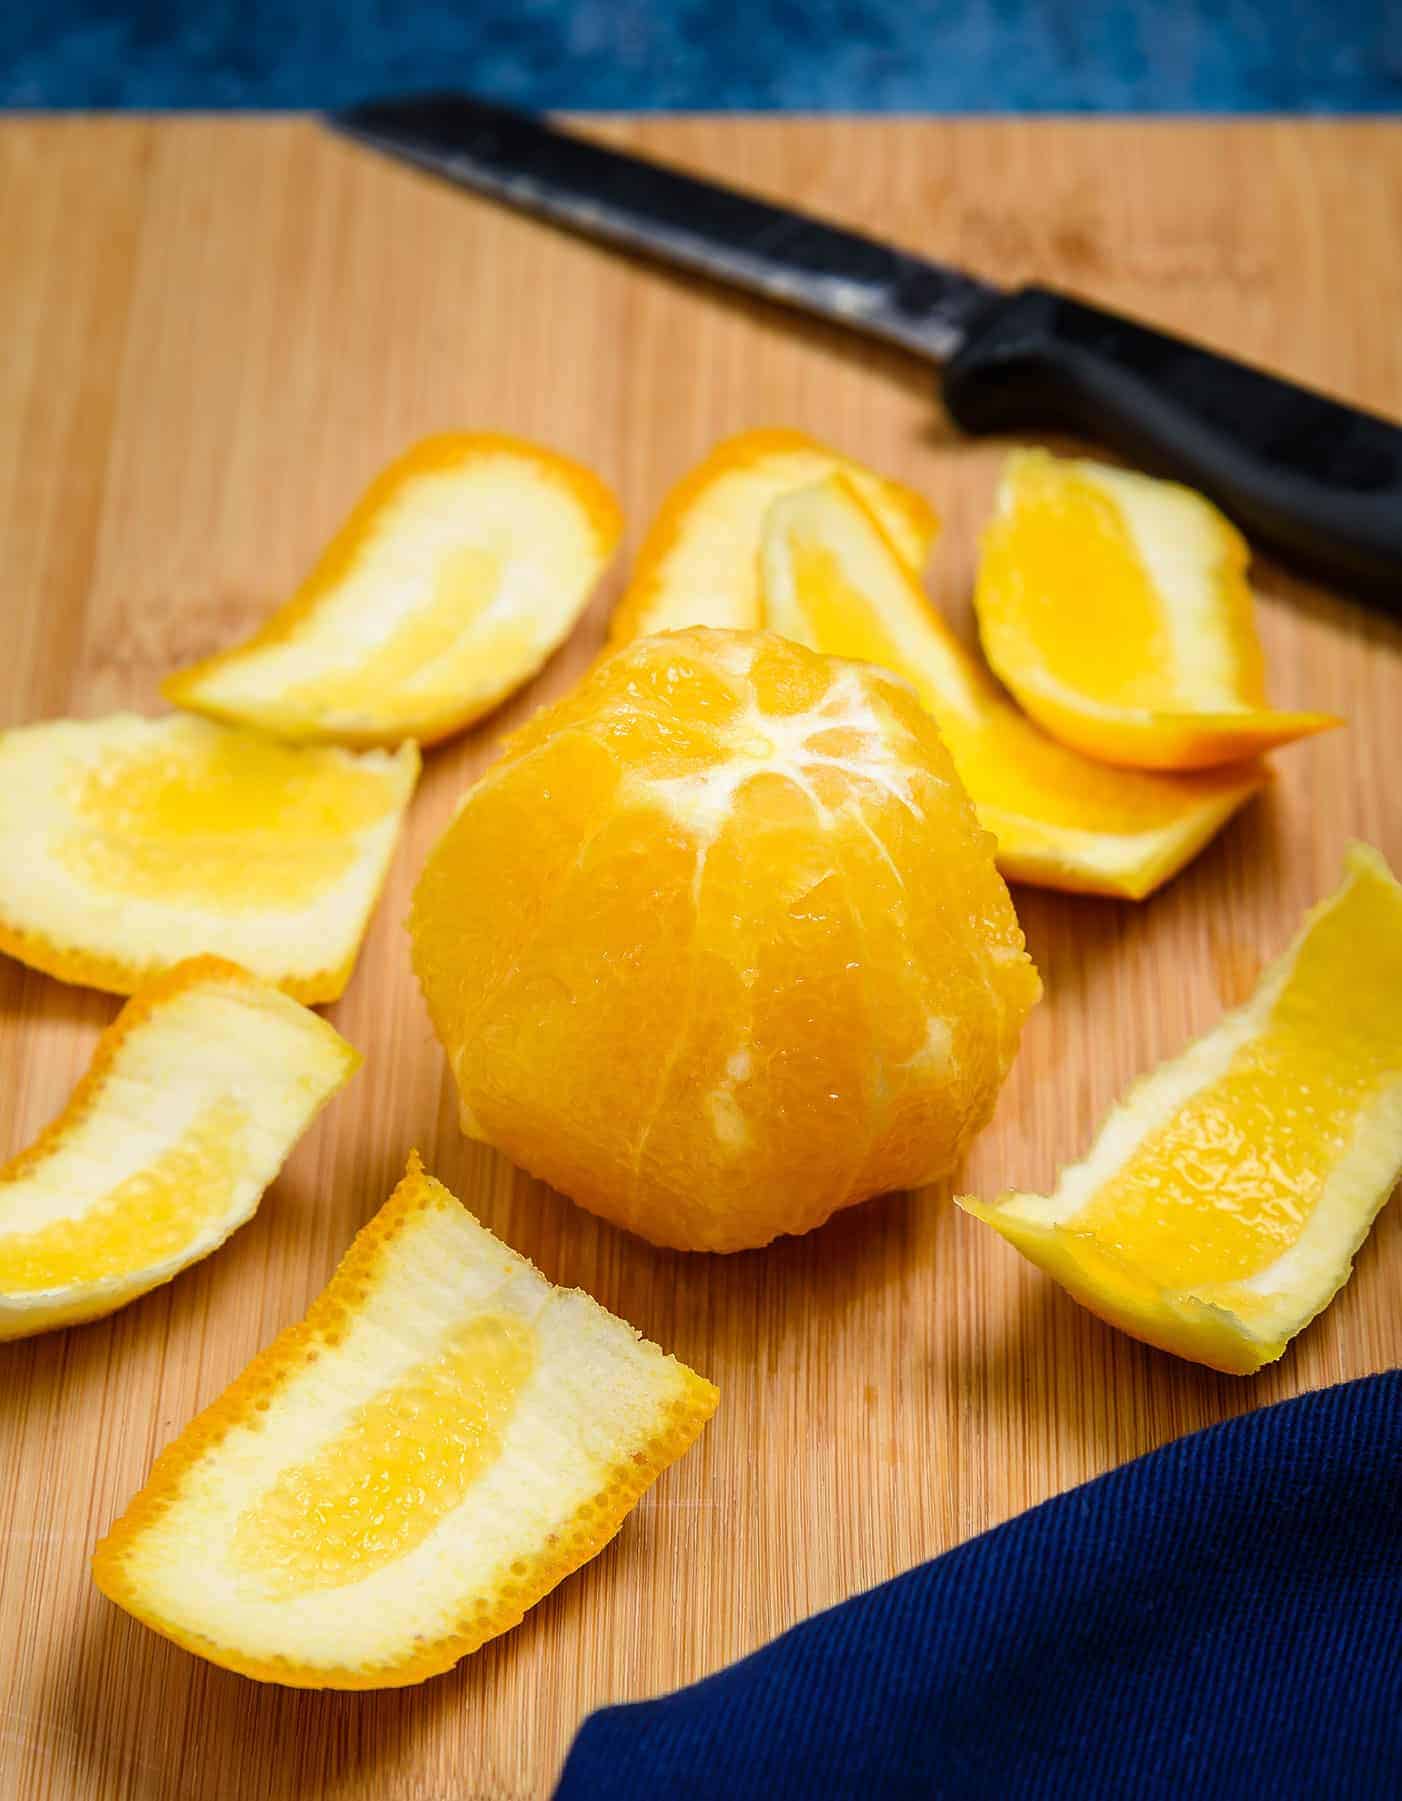 Orange with peel sliced off